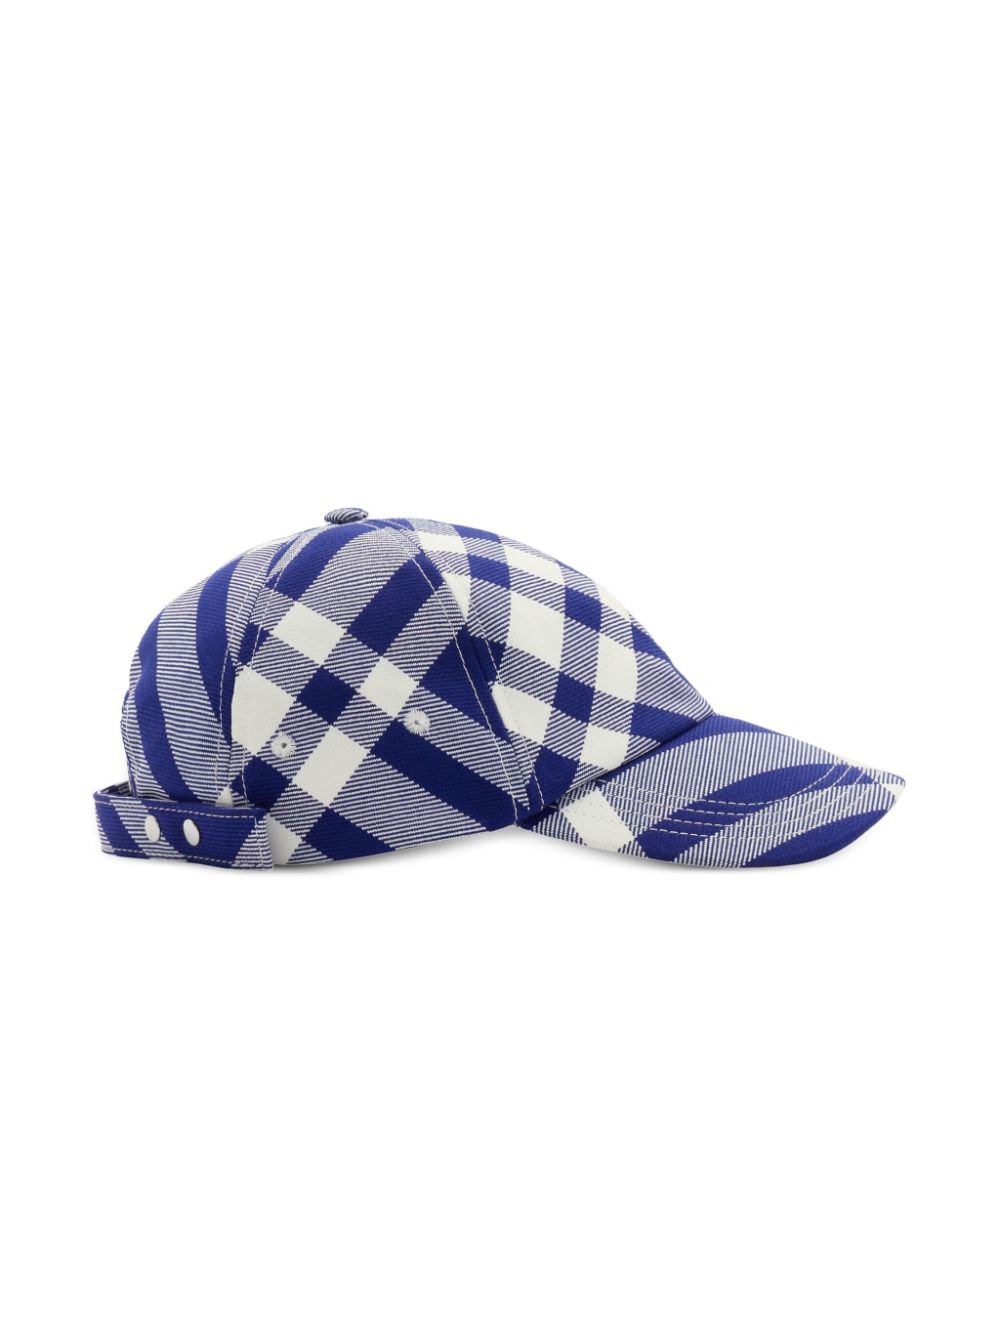 Check-plaid cotton baseball cap<BR/><BR/><BR/>